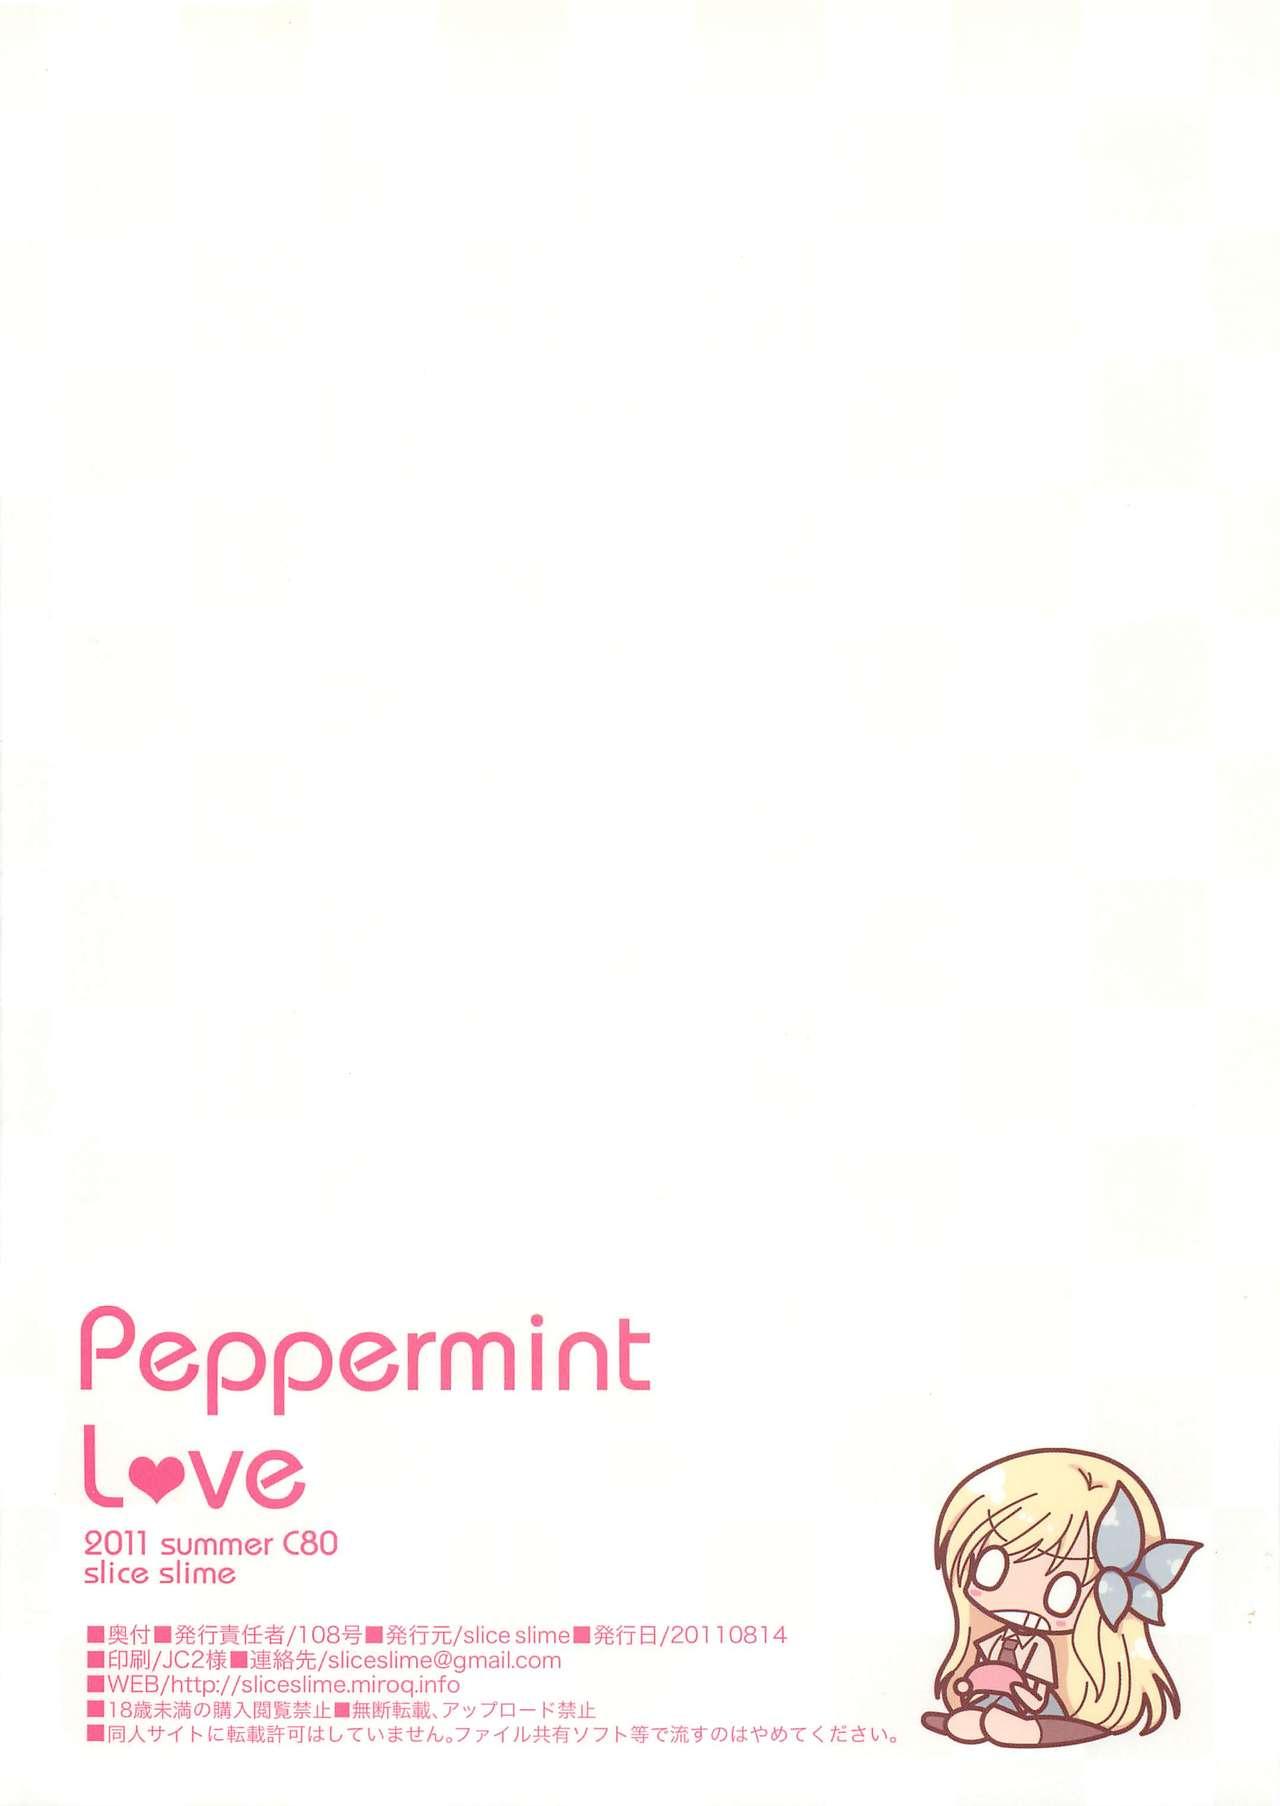 Peppermint love 14